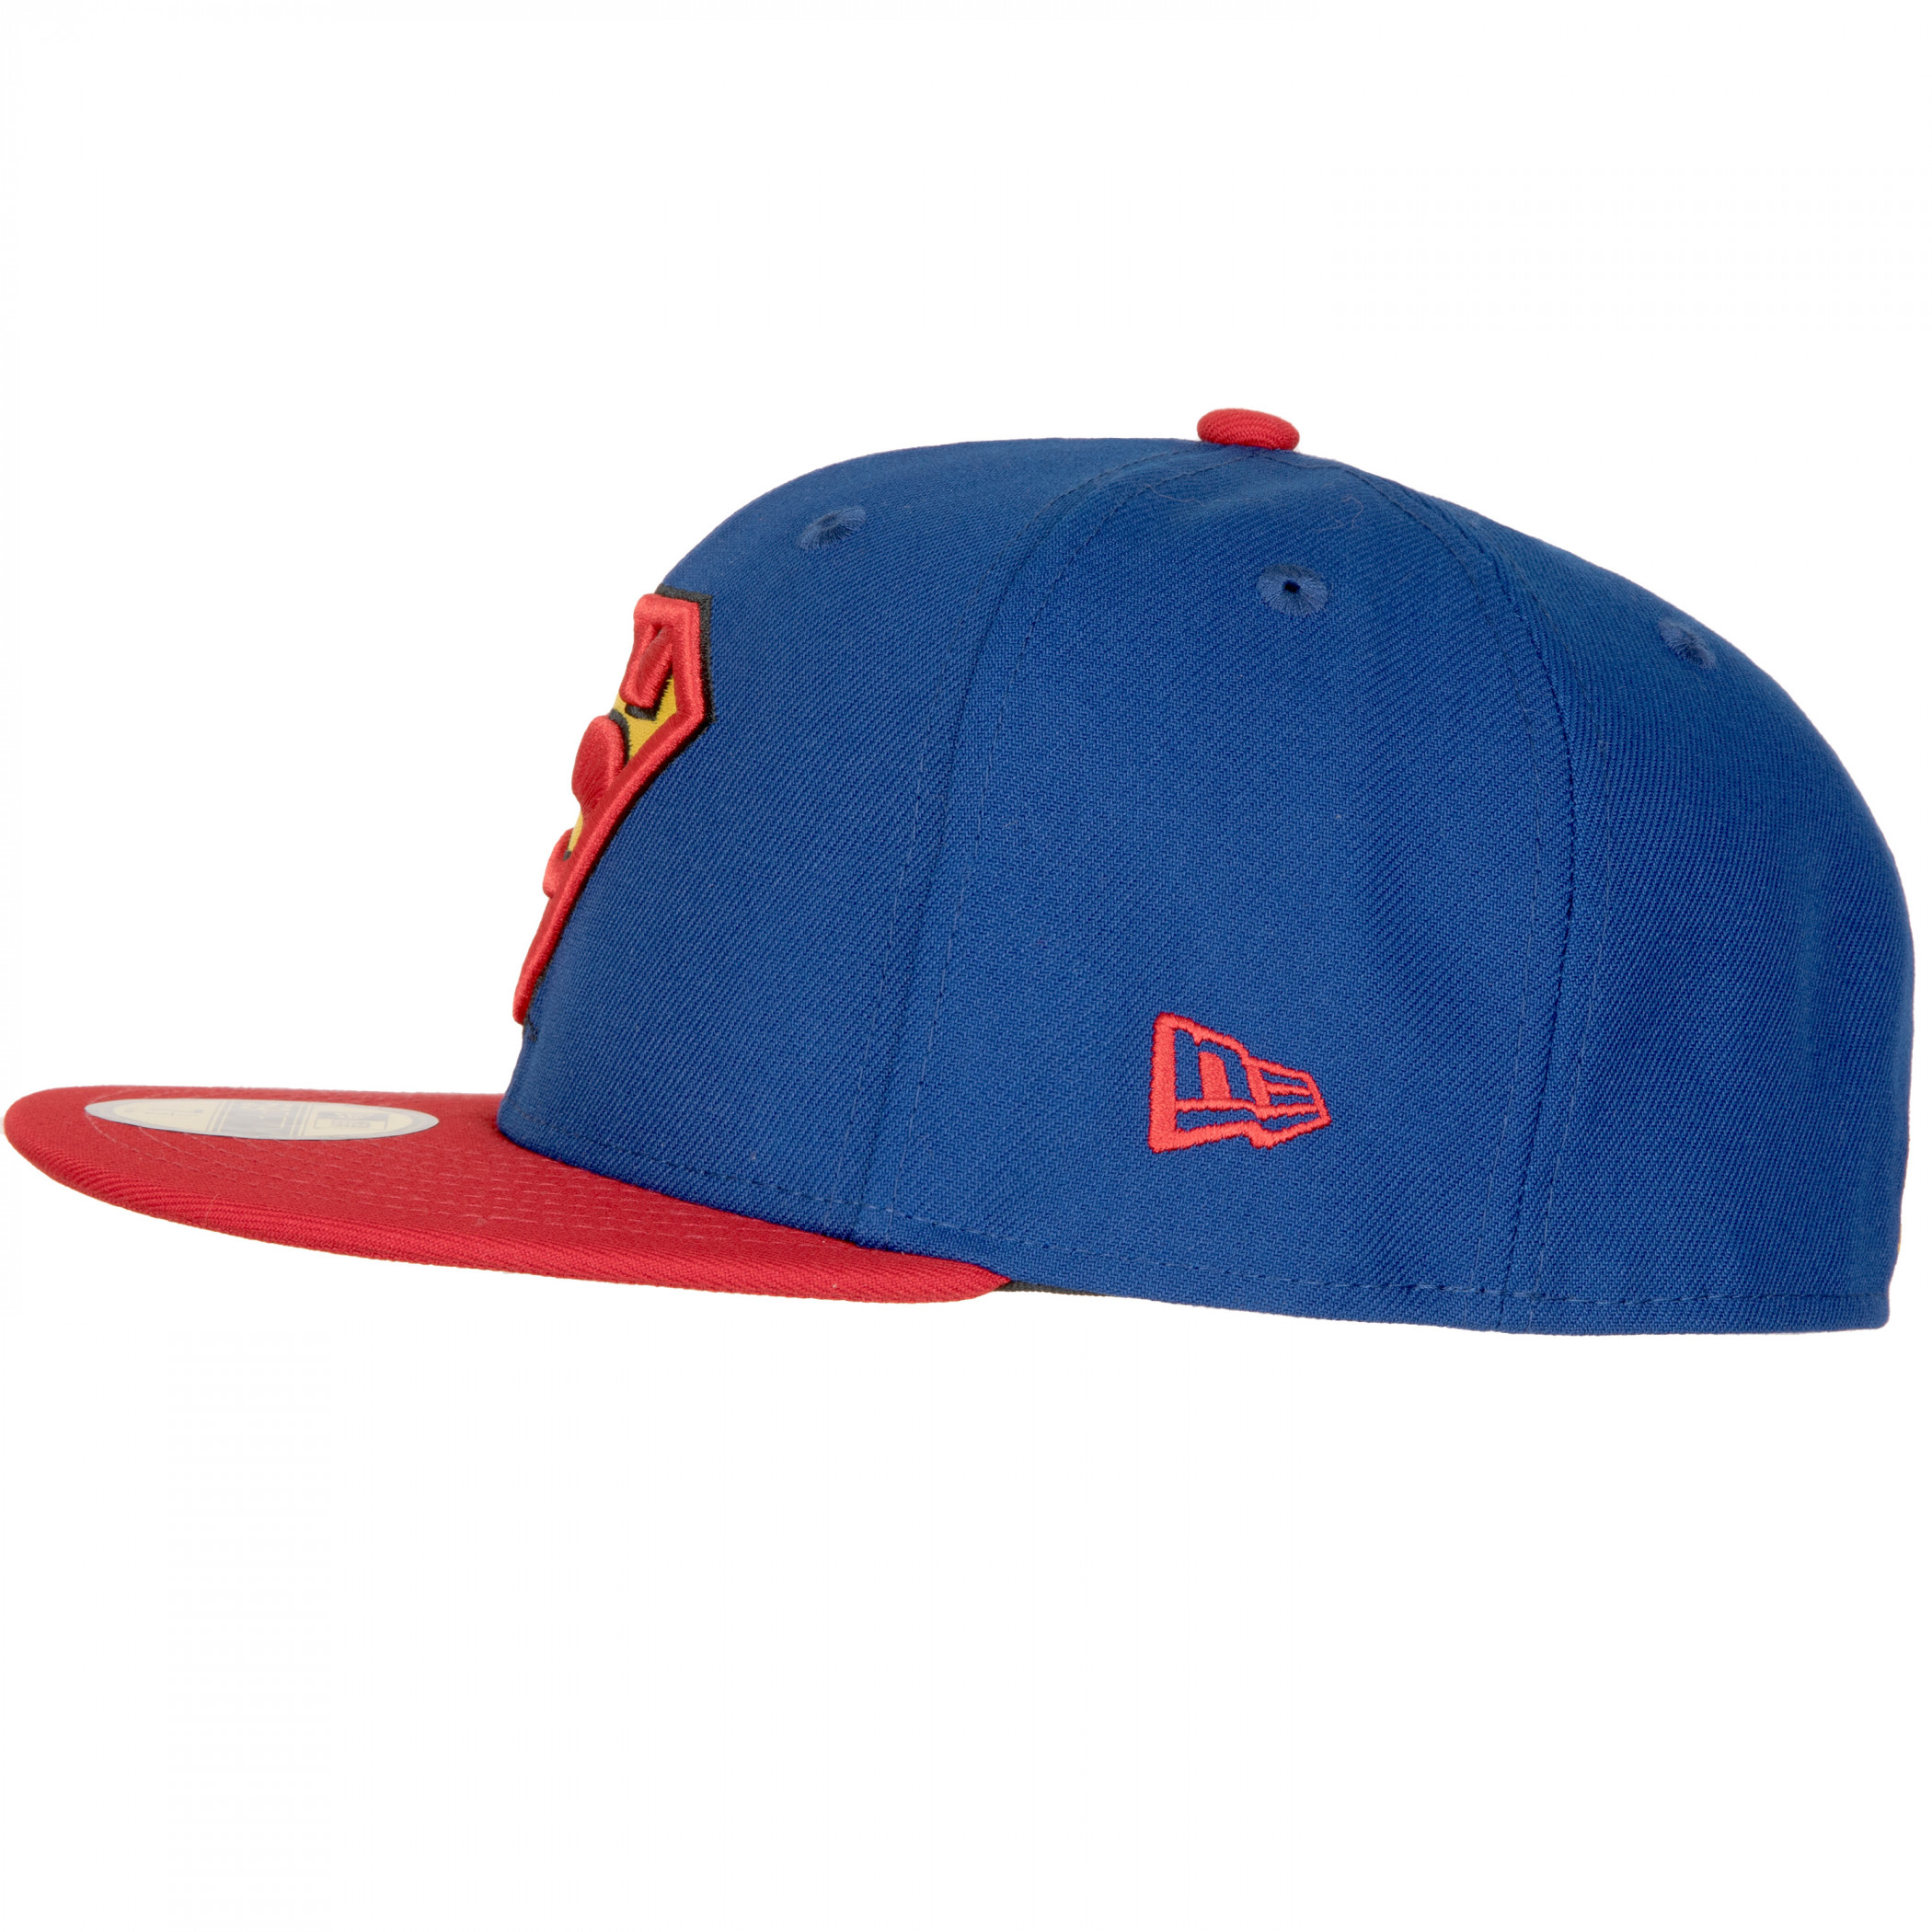 Superman Classic Emblem New Era 59Fifty Fitted Hat